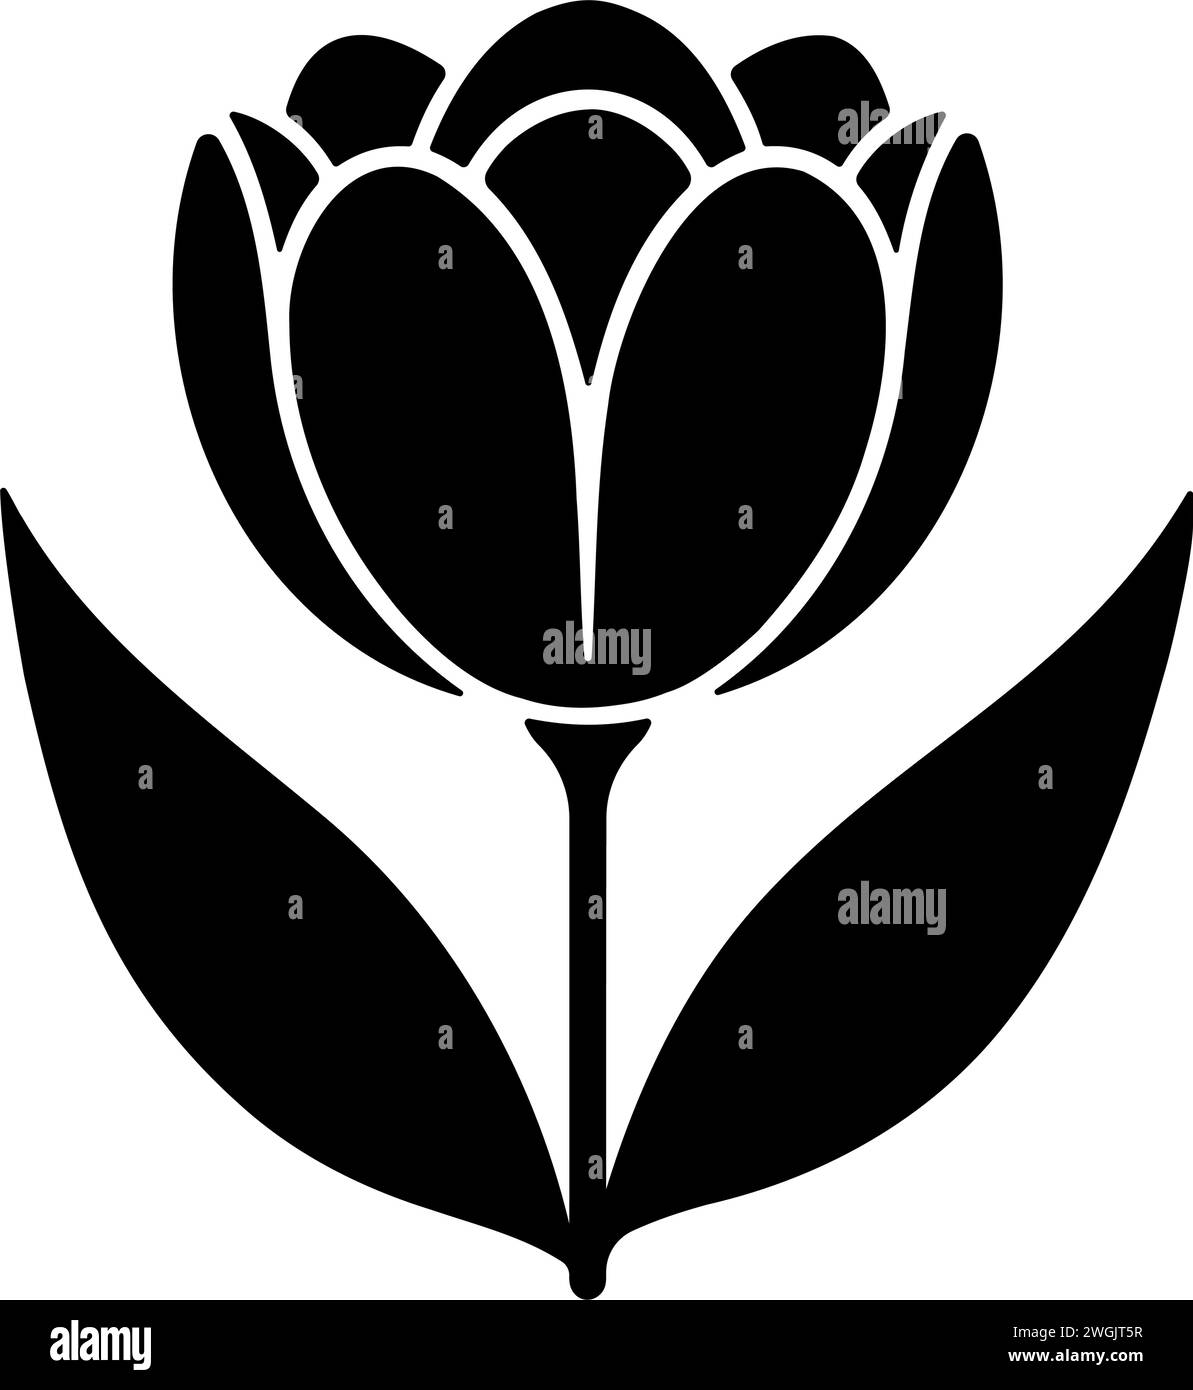 Tulip flower with leaves monochrome clip art. vector illustration Stock Vector